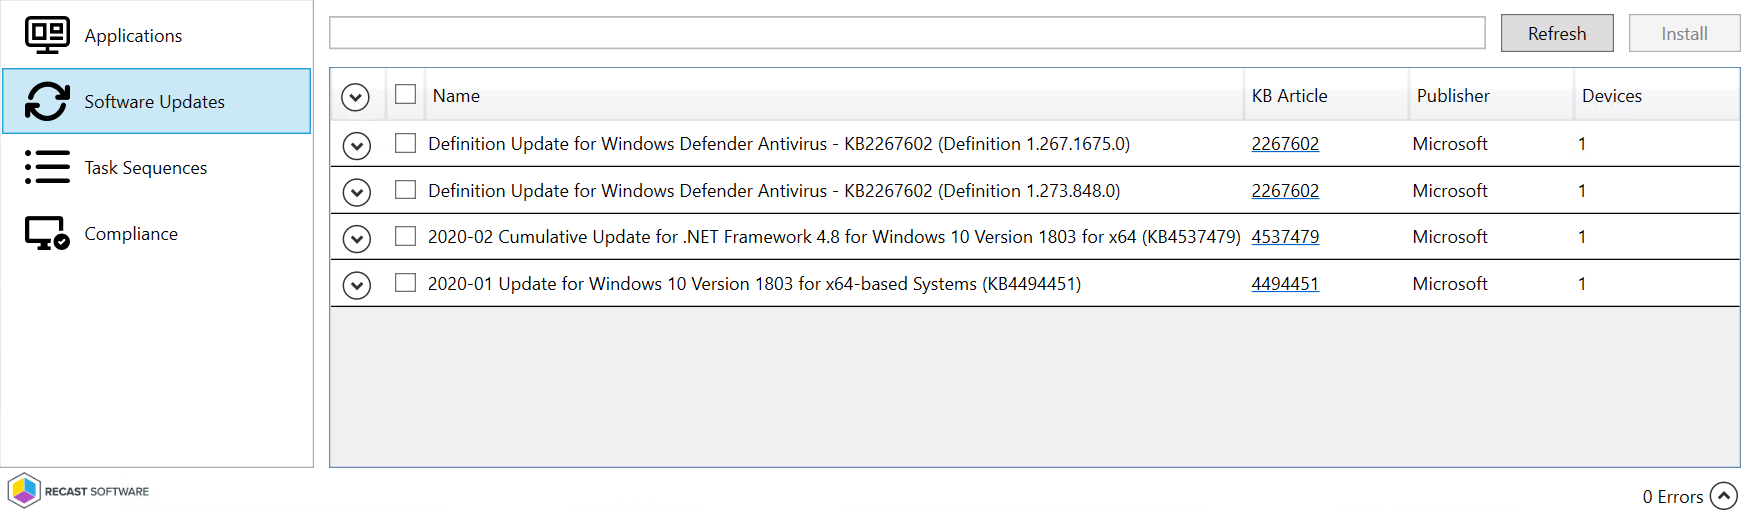 Remote Software Center - Software Updates tab screenshot